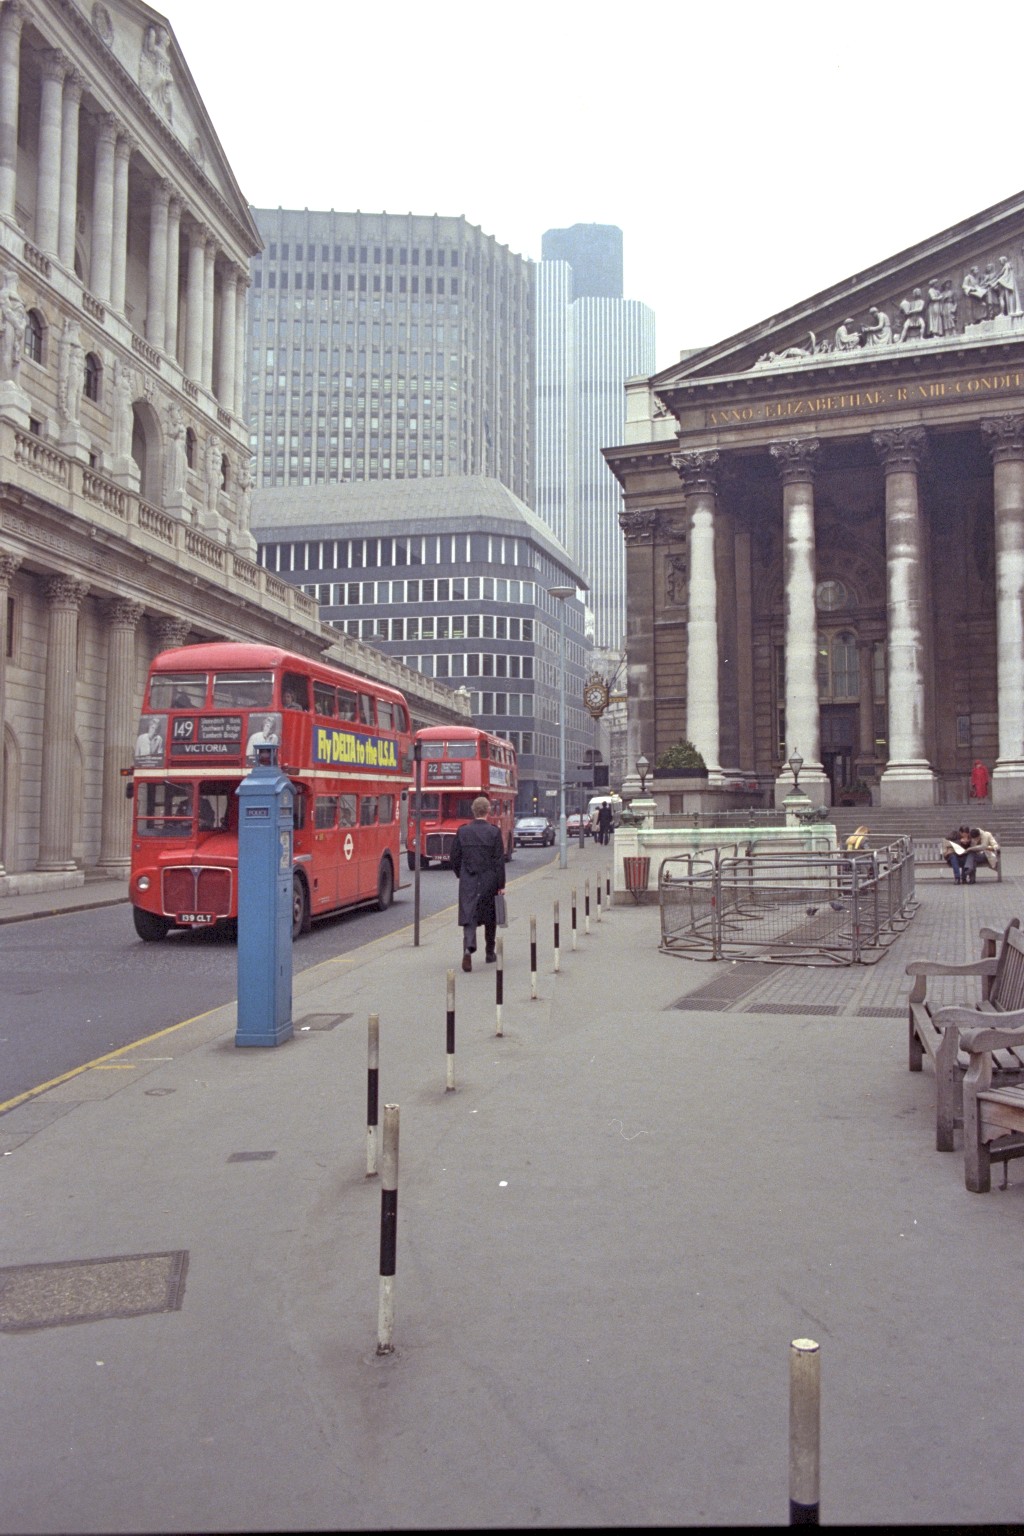 Bank of England & Royal Exchange, London 2